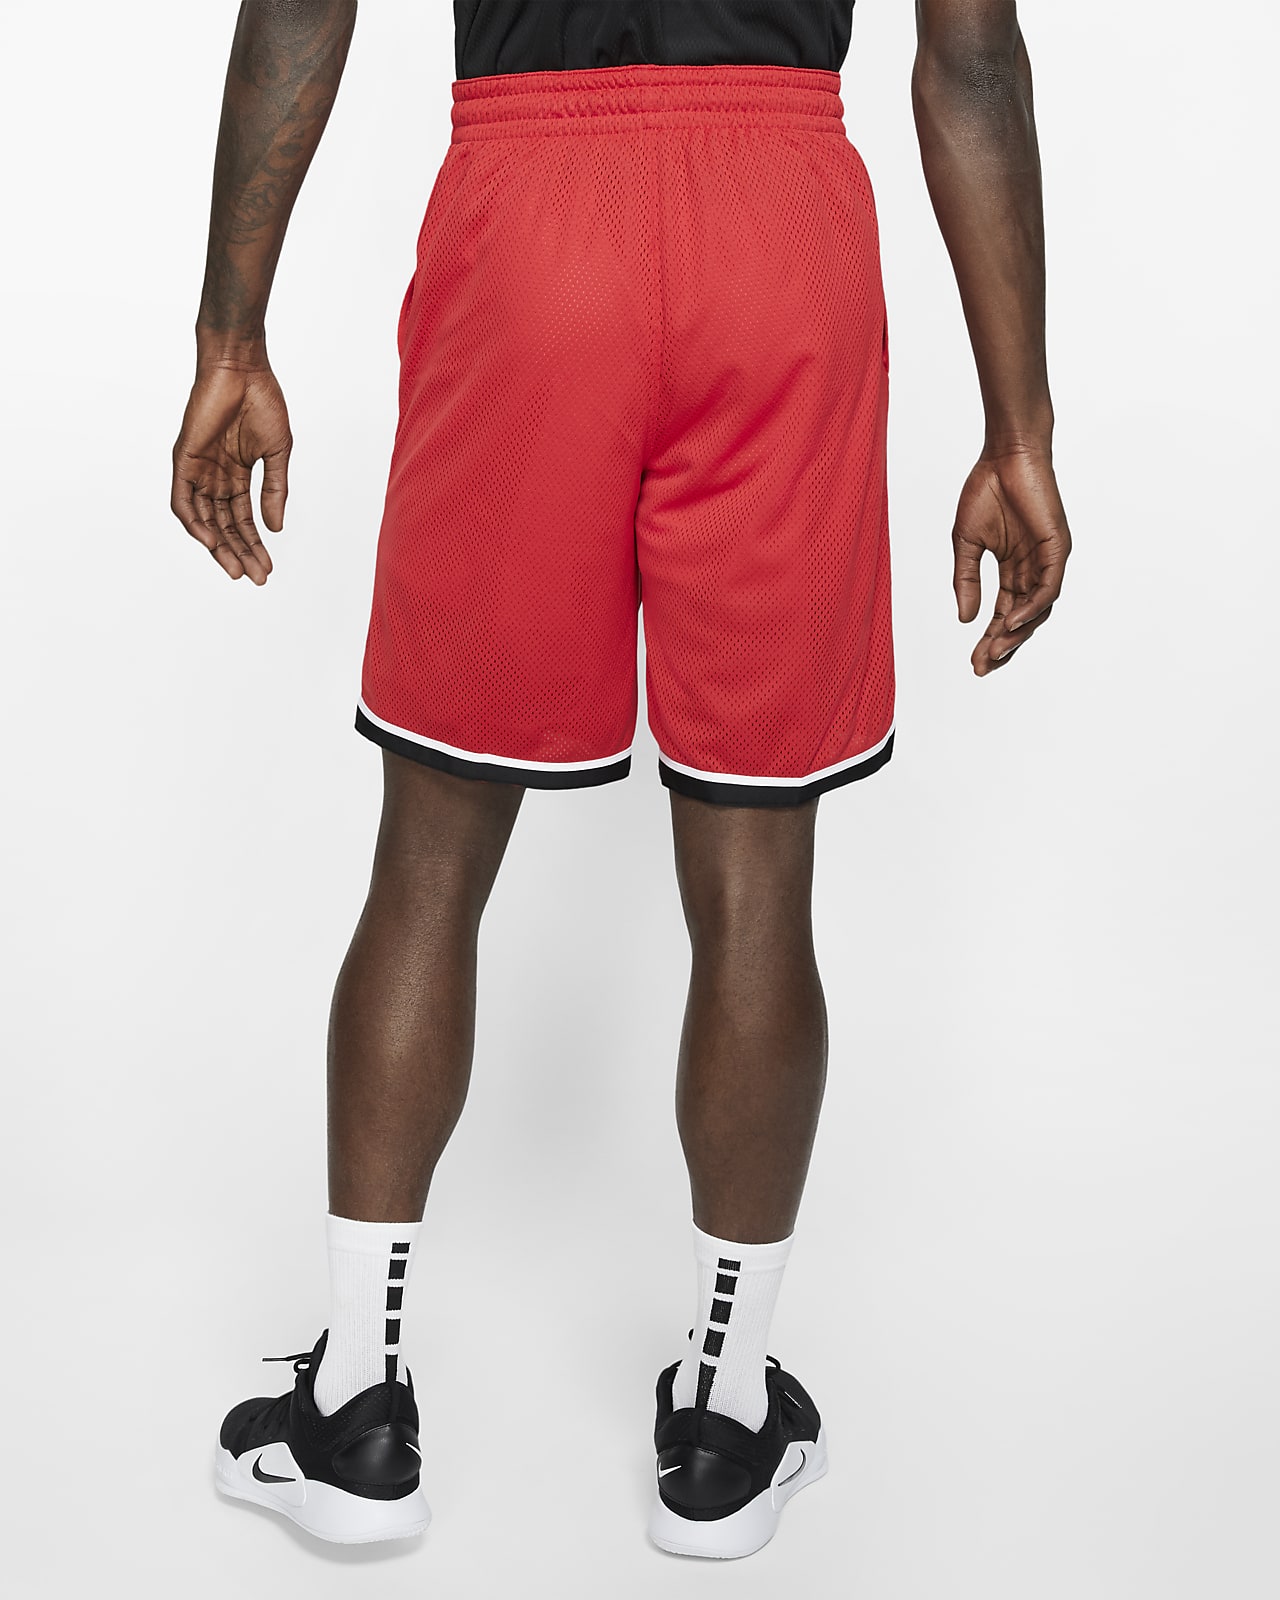 nike mens basketball shorts size chart